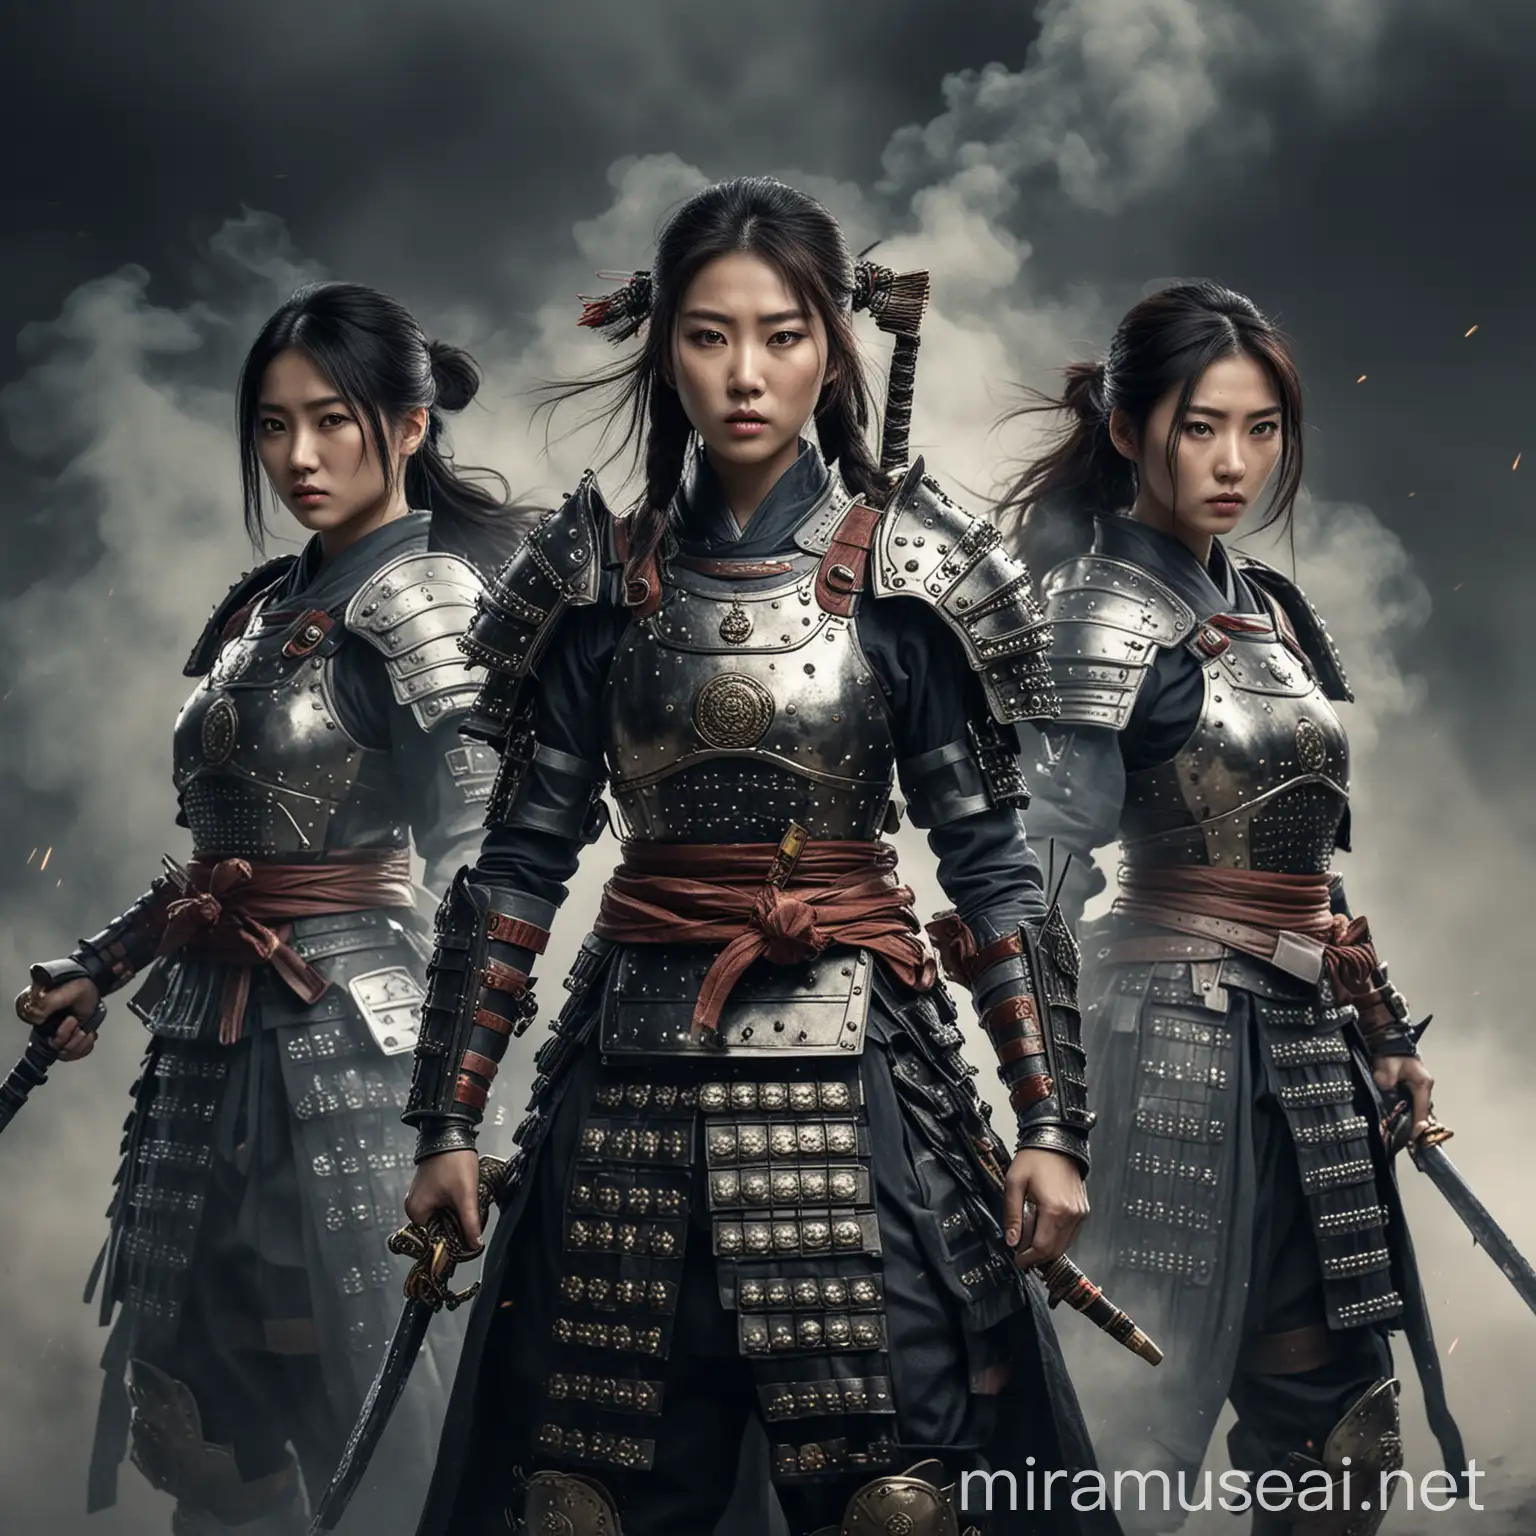 Korean Women Warriors in Samurai Armor Pose Amid Battlefield Chaos